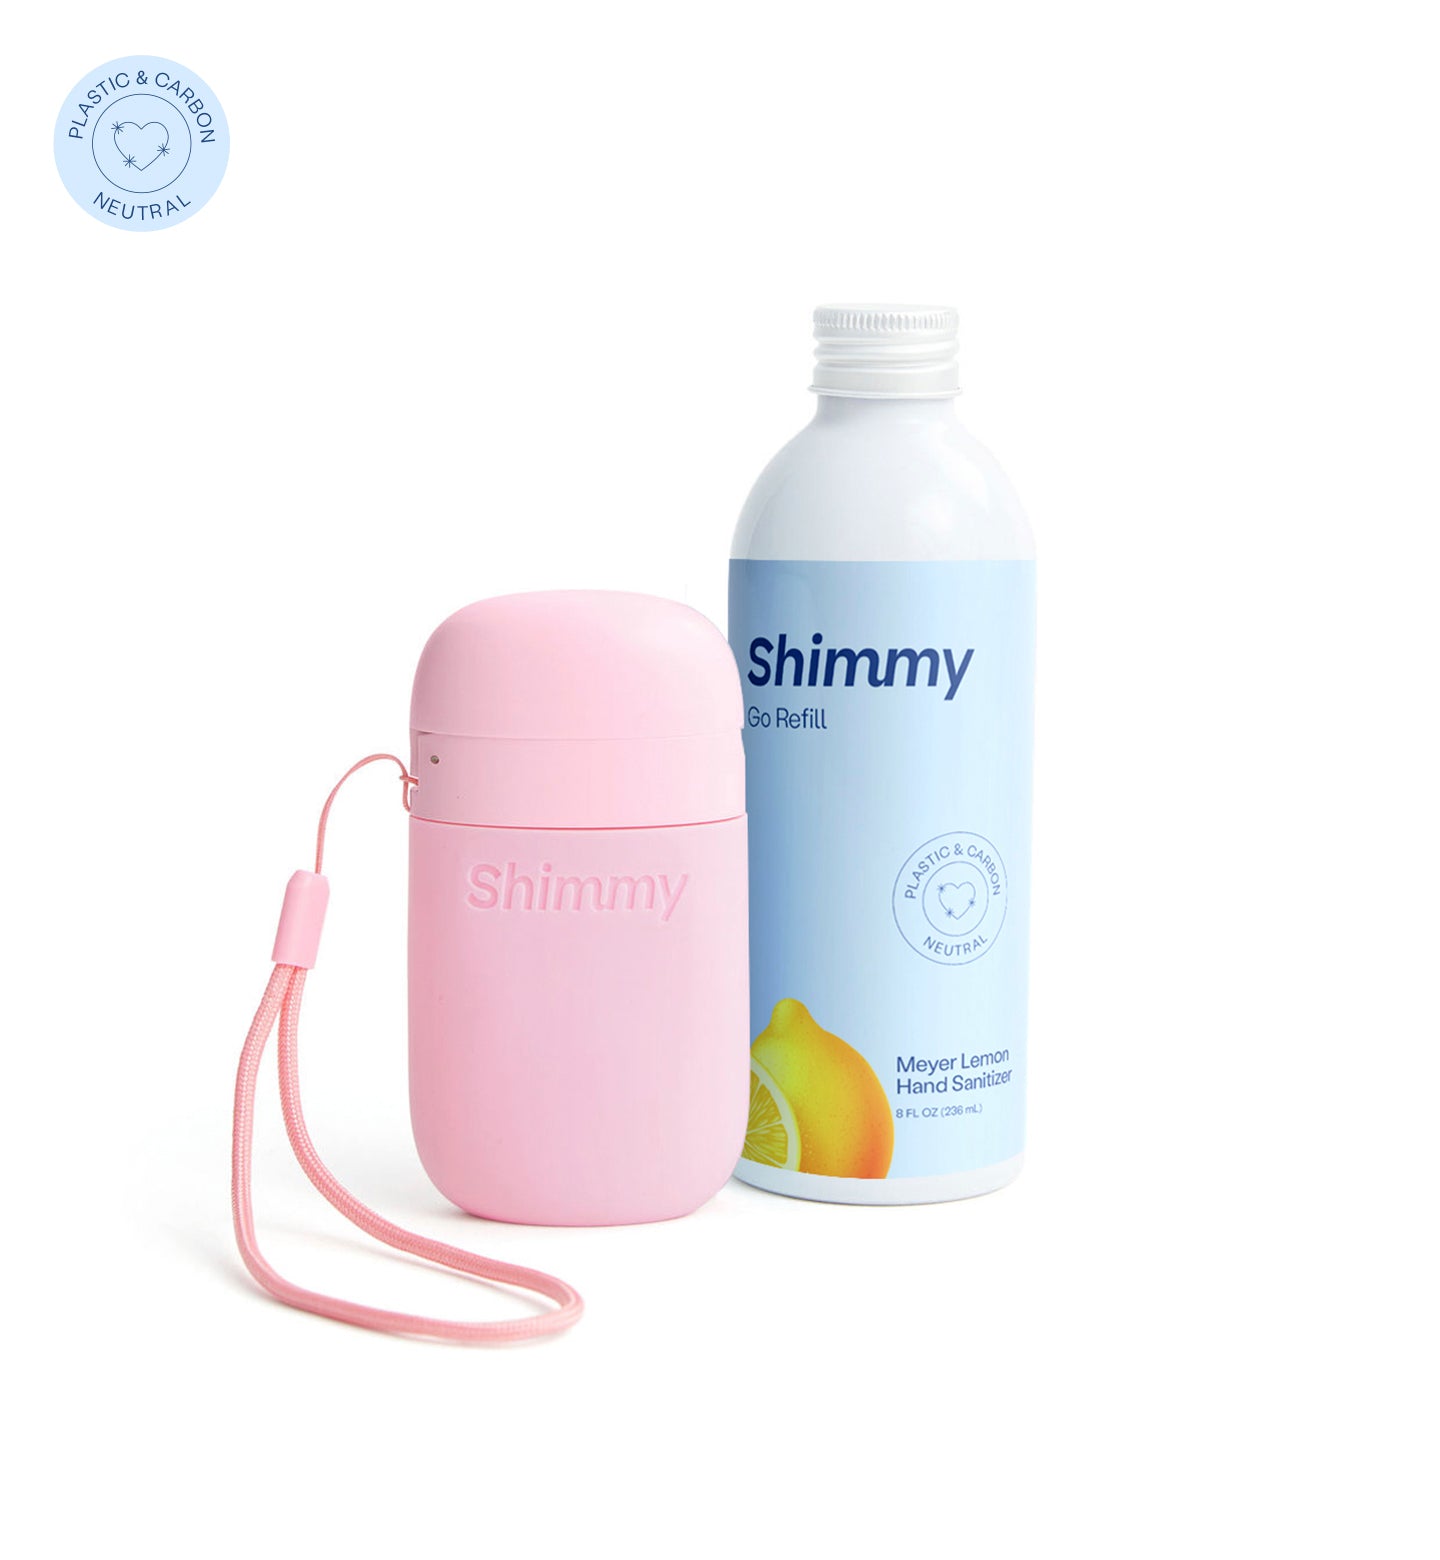 Shimmy Go Portable Hand Sanitizer Dispenser Soft Pink + Meyer Lemon Hand Sanitizer [40734763385023] - 